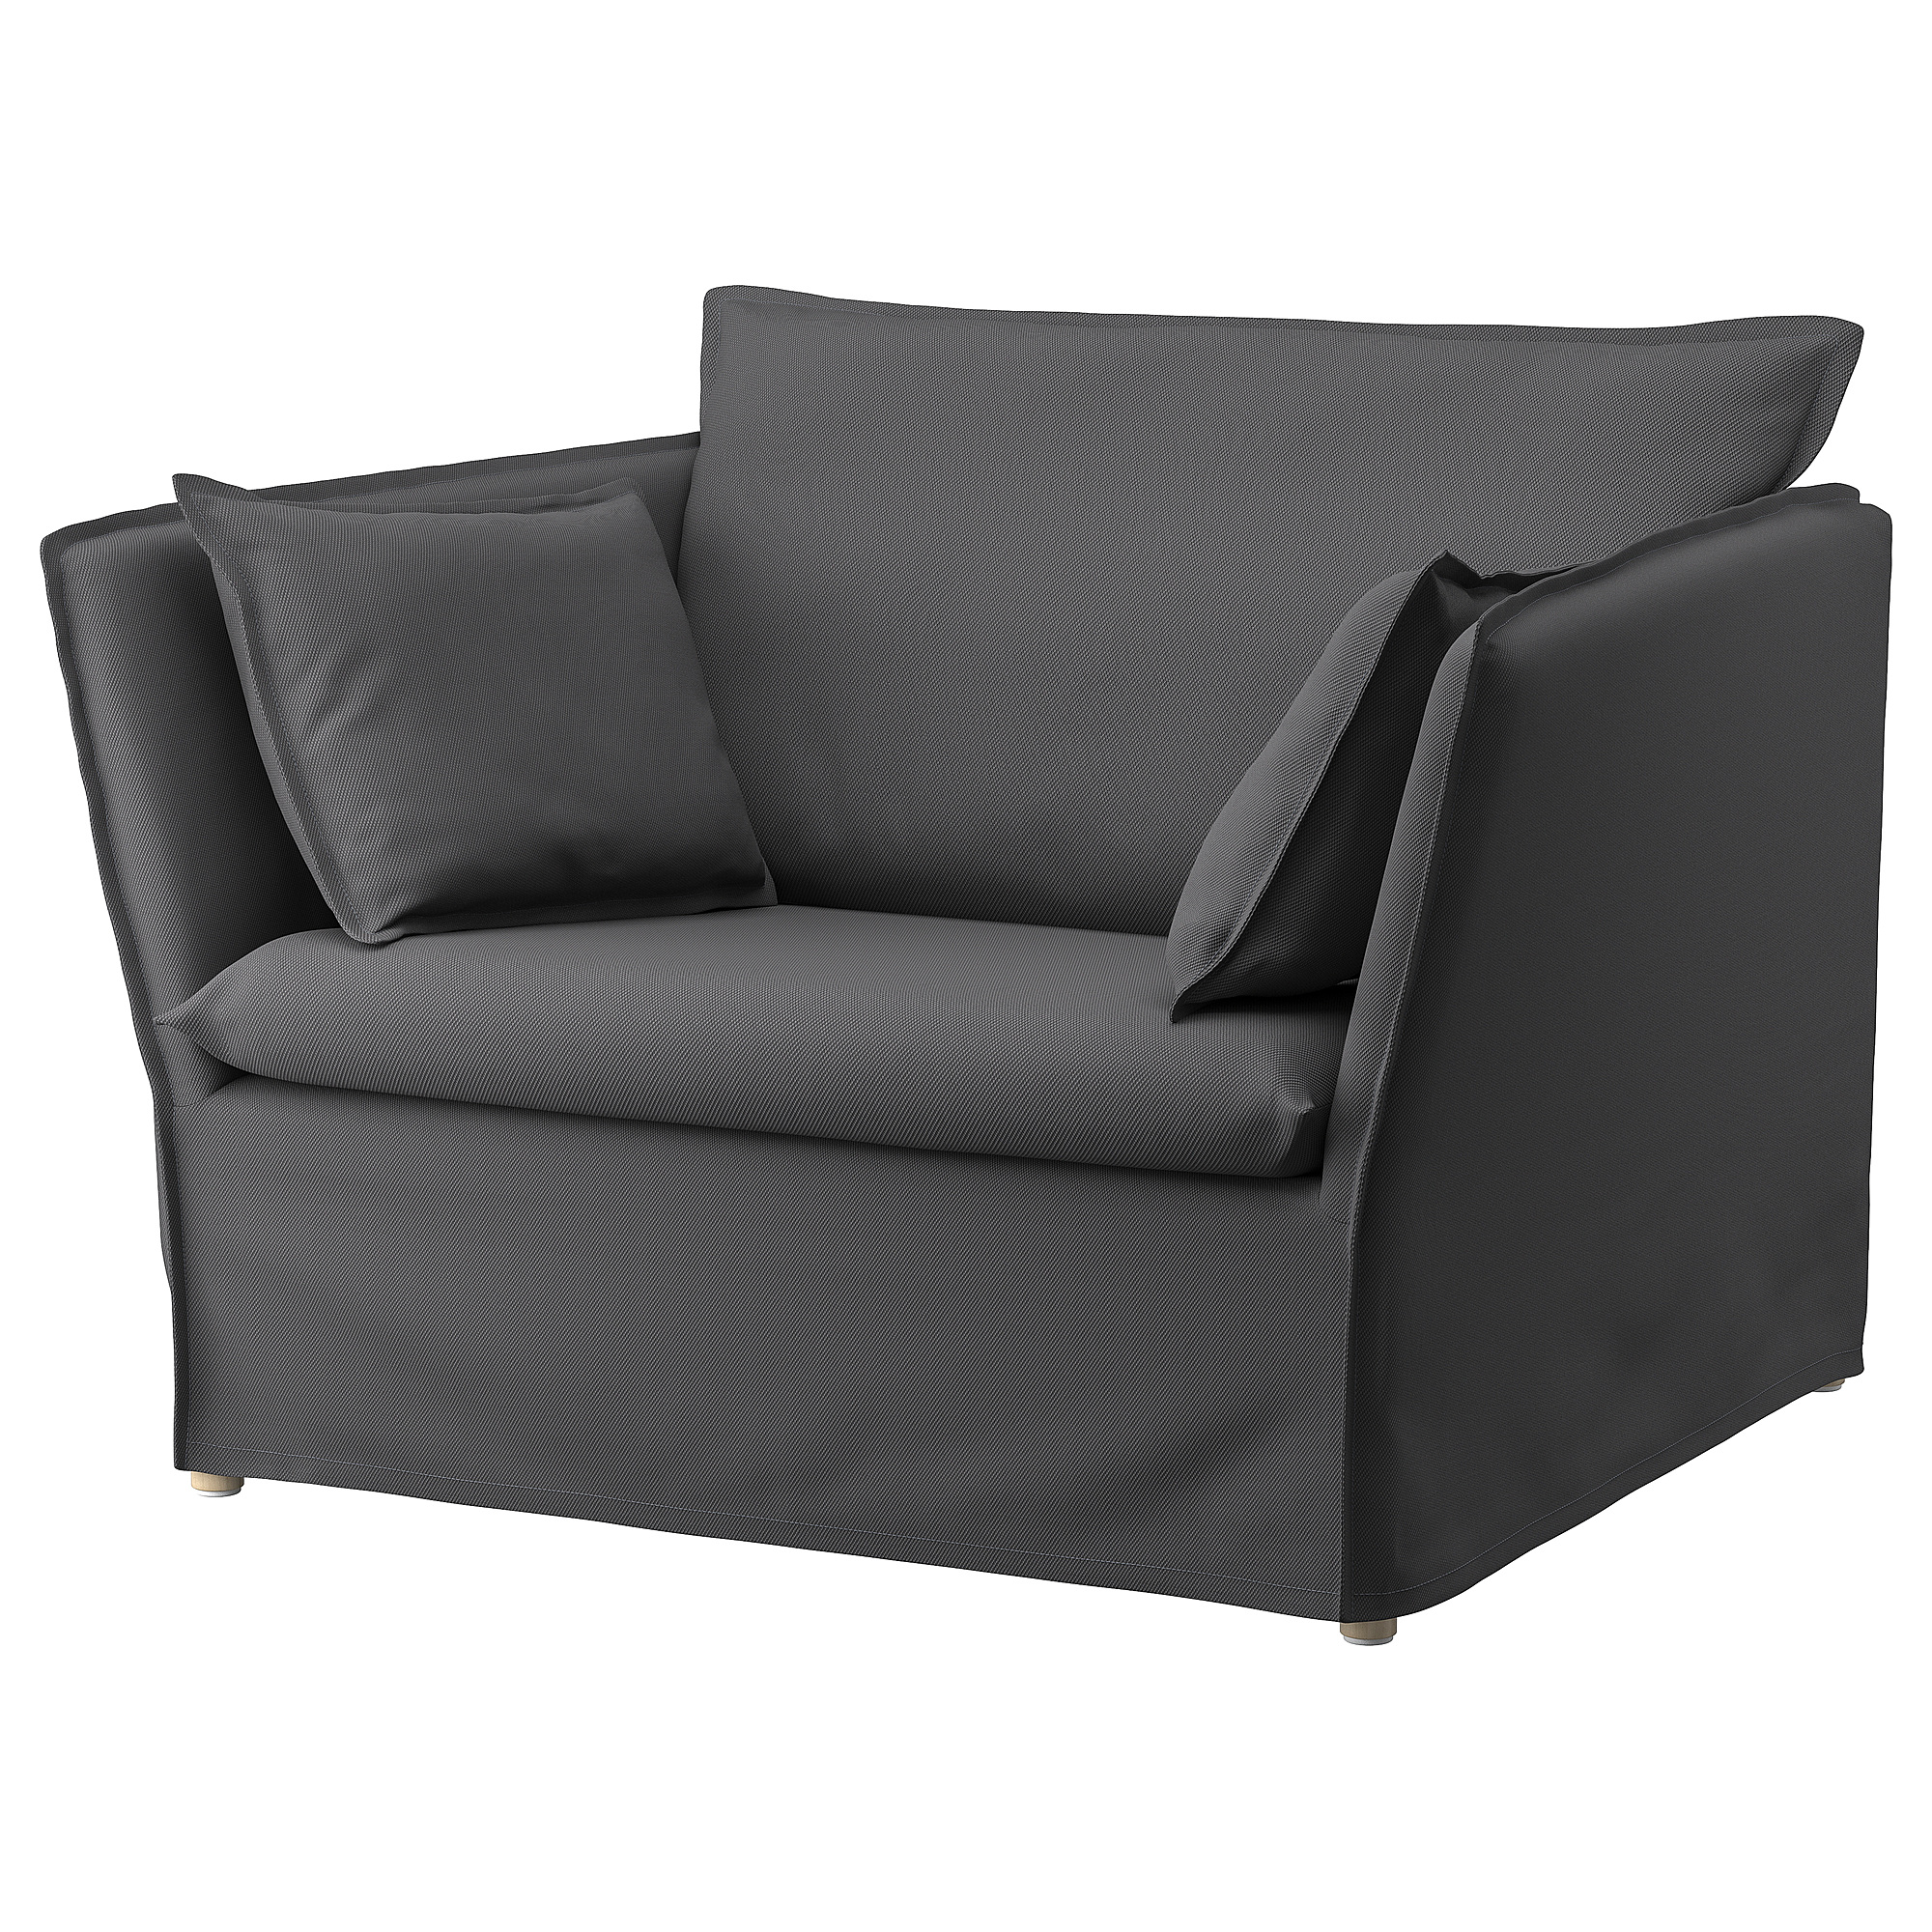 BACKSÄLEN cover for 1,5-seat armchair